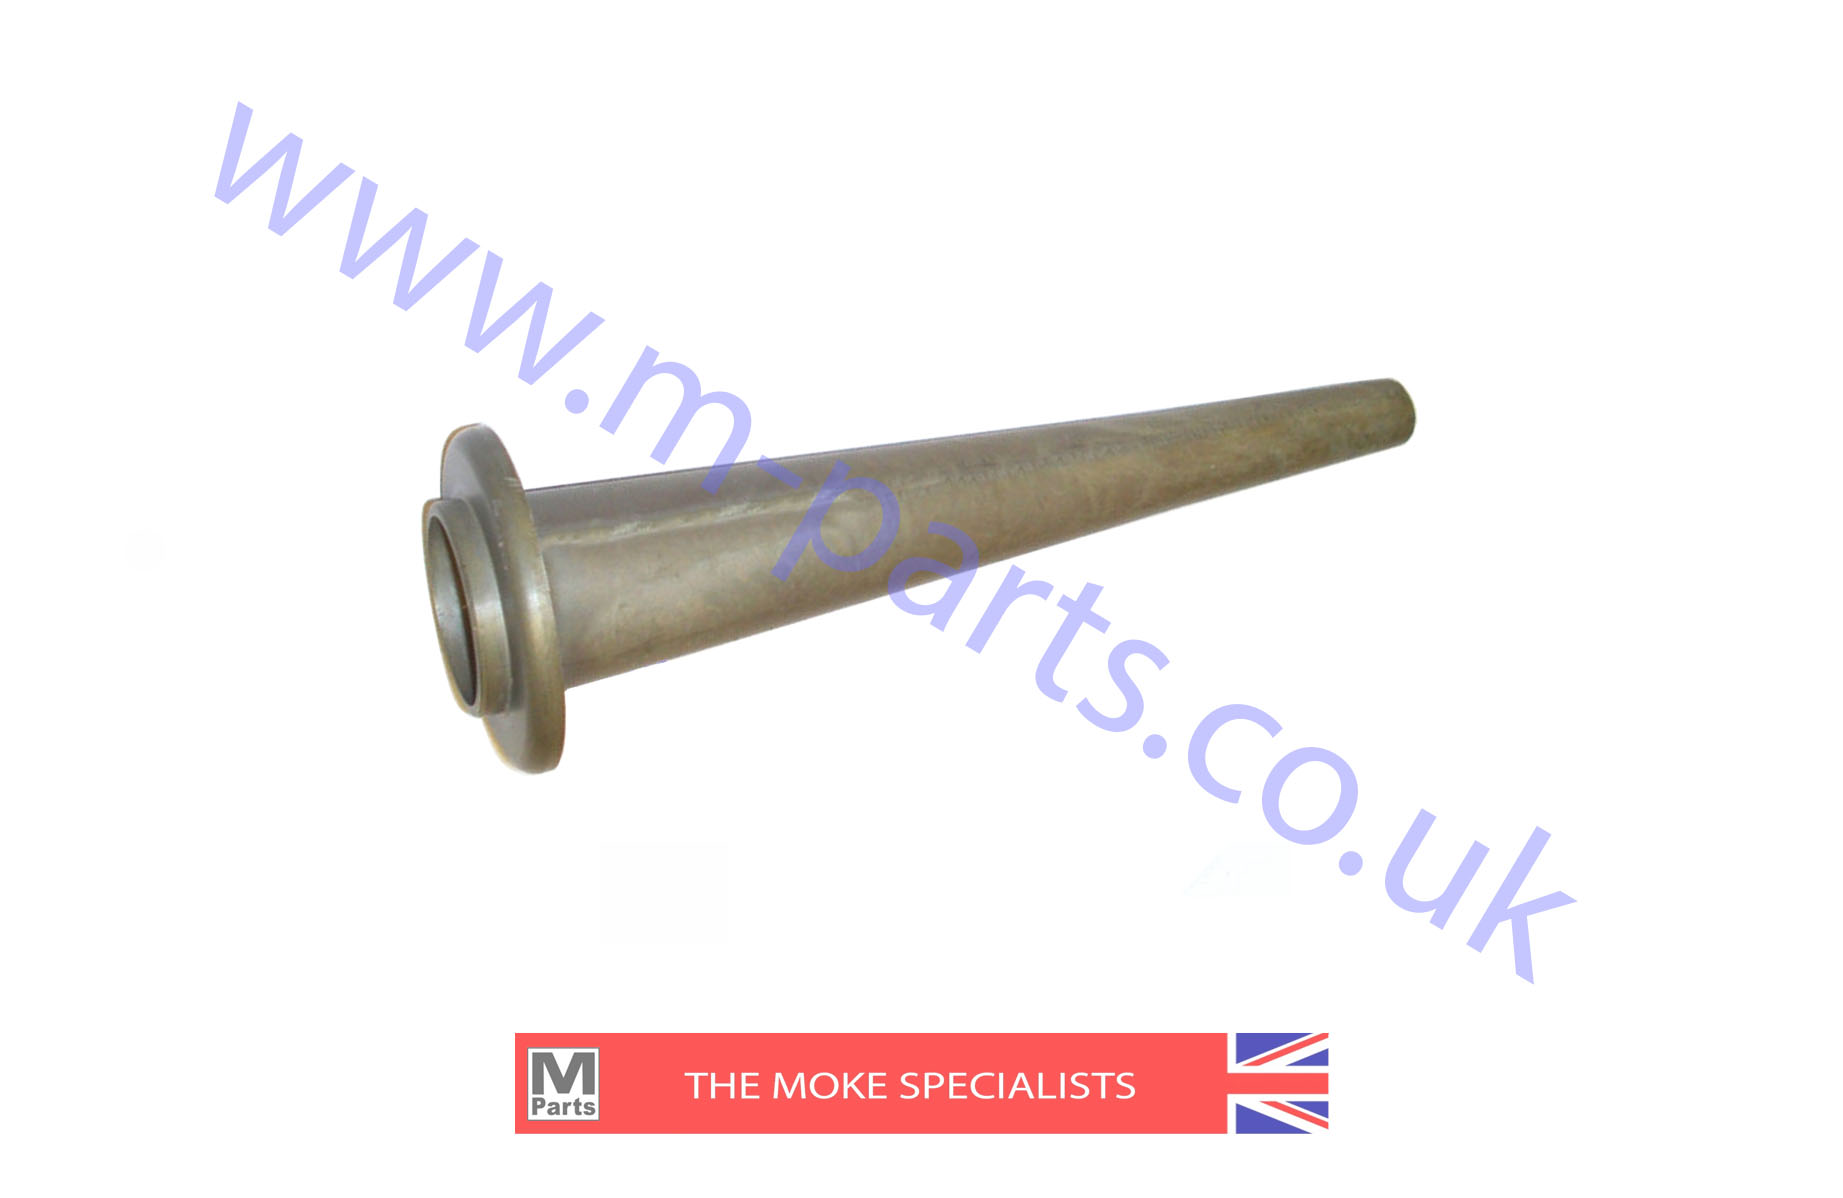 15. Suspension alloy trumpet rear (long)